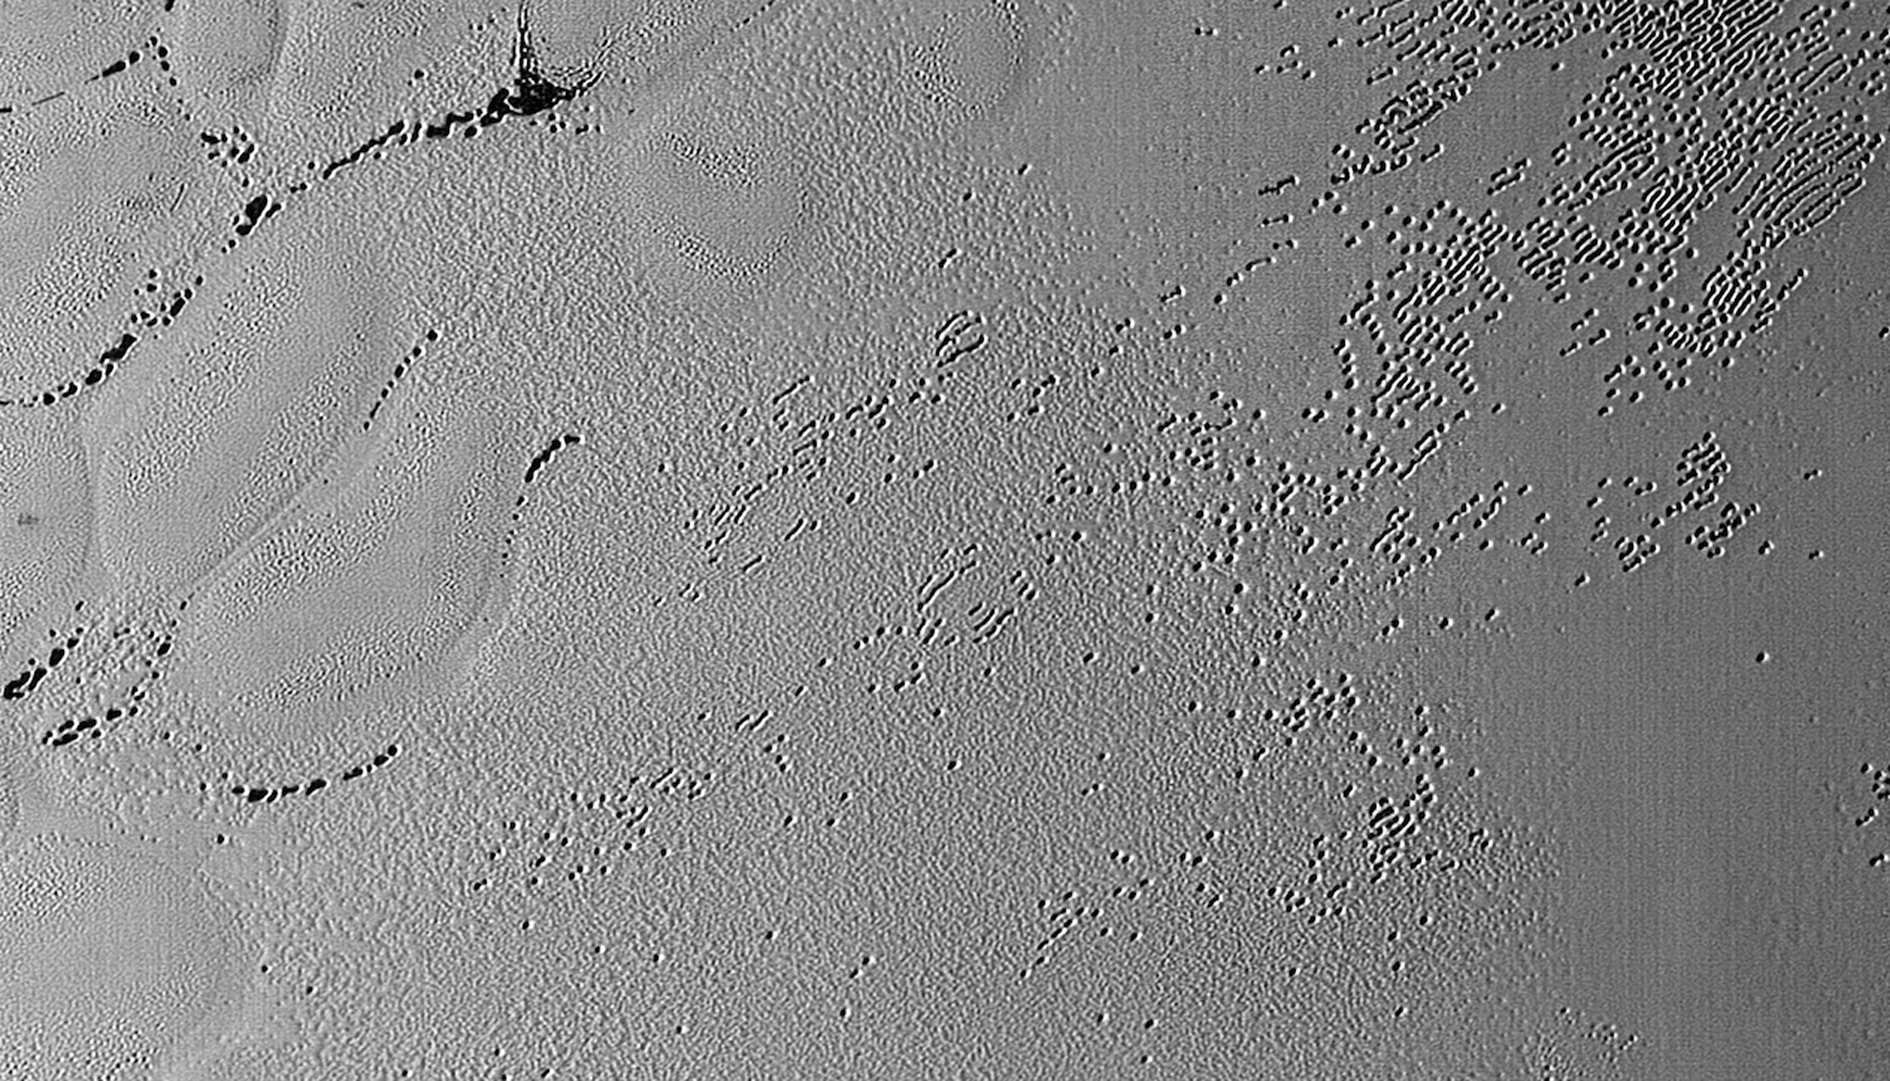 Figure 10: Pitted terrain on Sputnik Planum. Credit: NASA/JHUAPL/SwRI